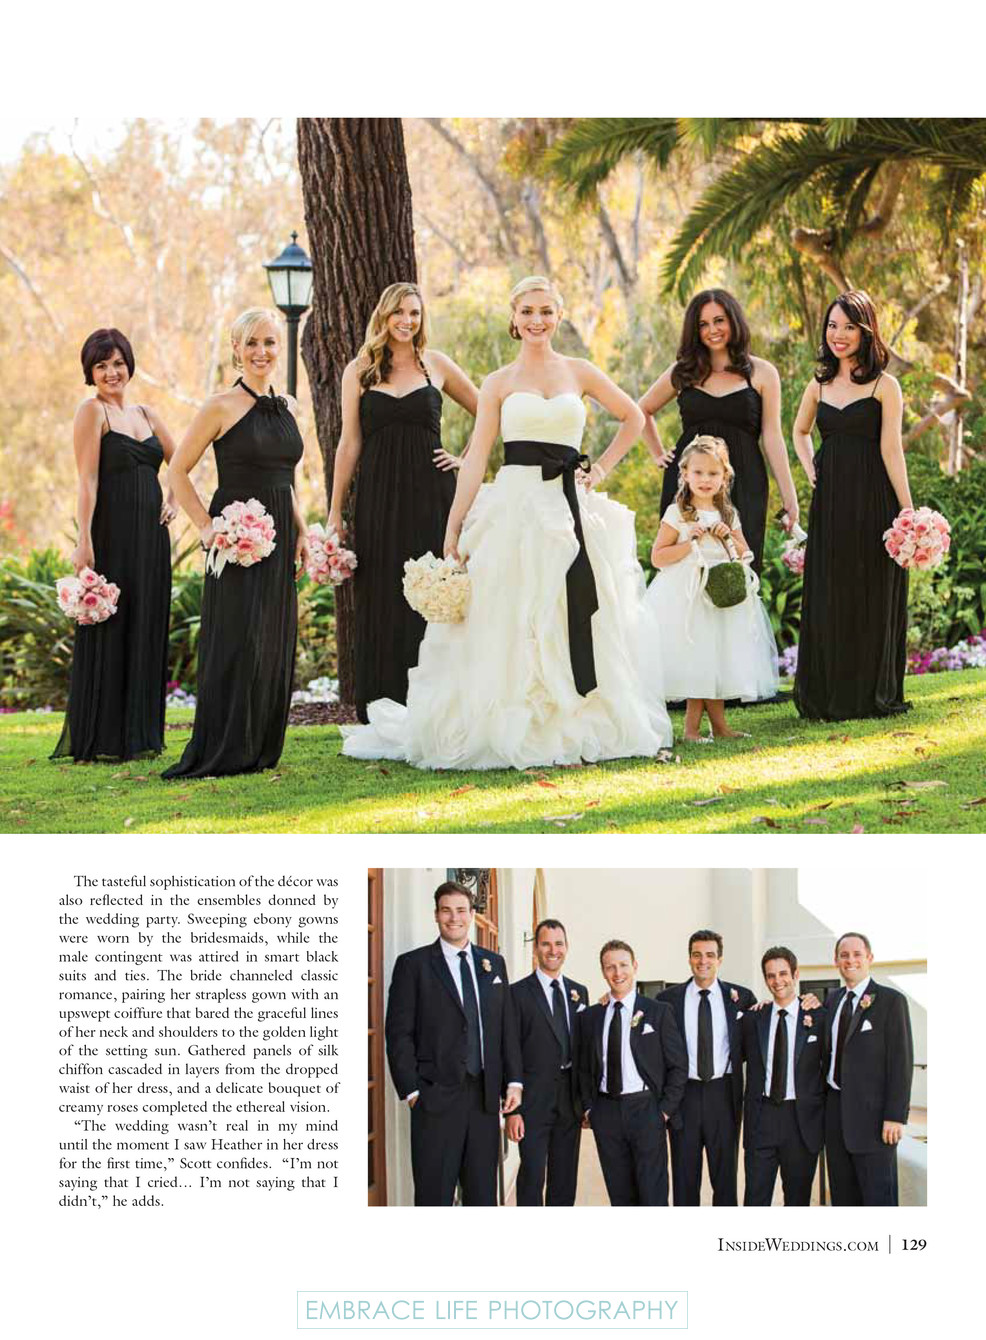 Wedding Party Portraits - Inside Weddings Magazine